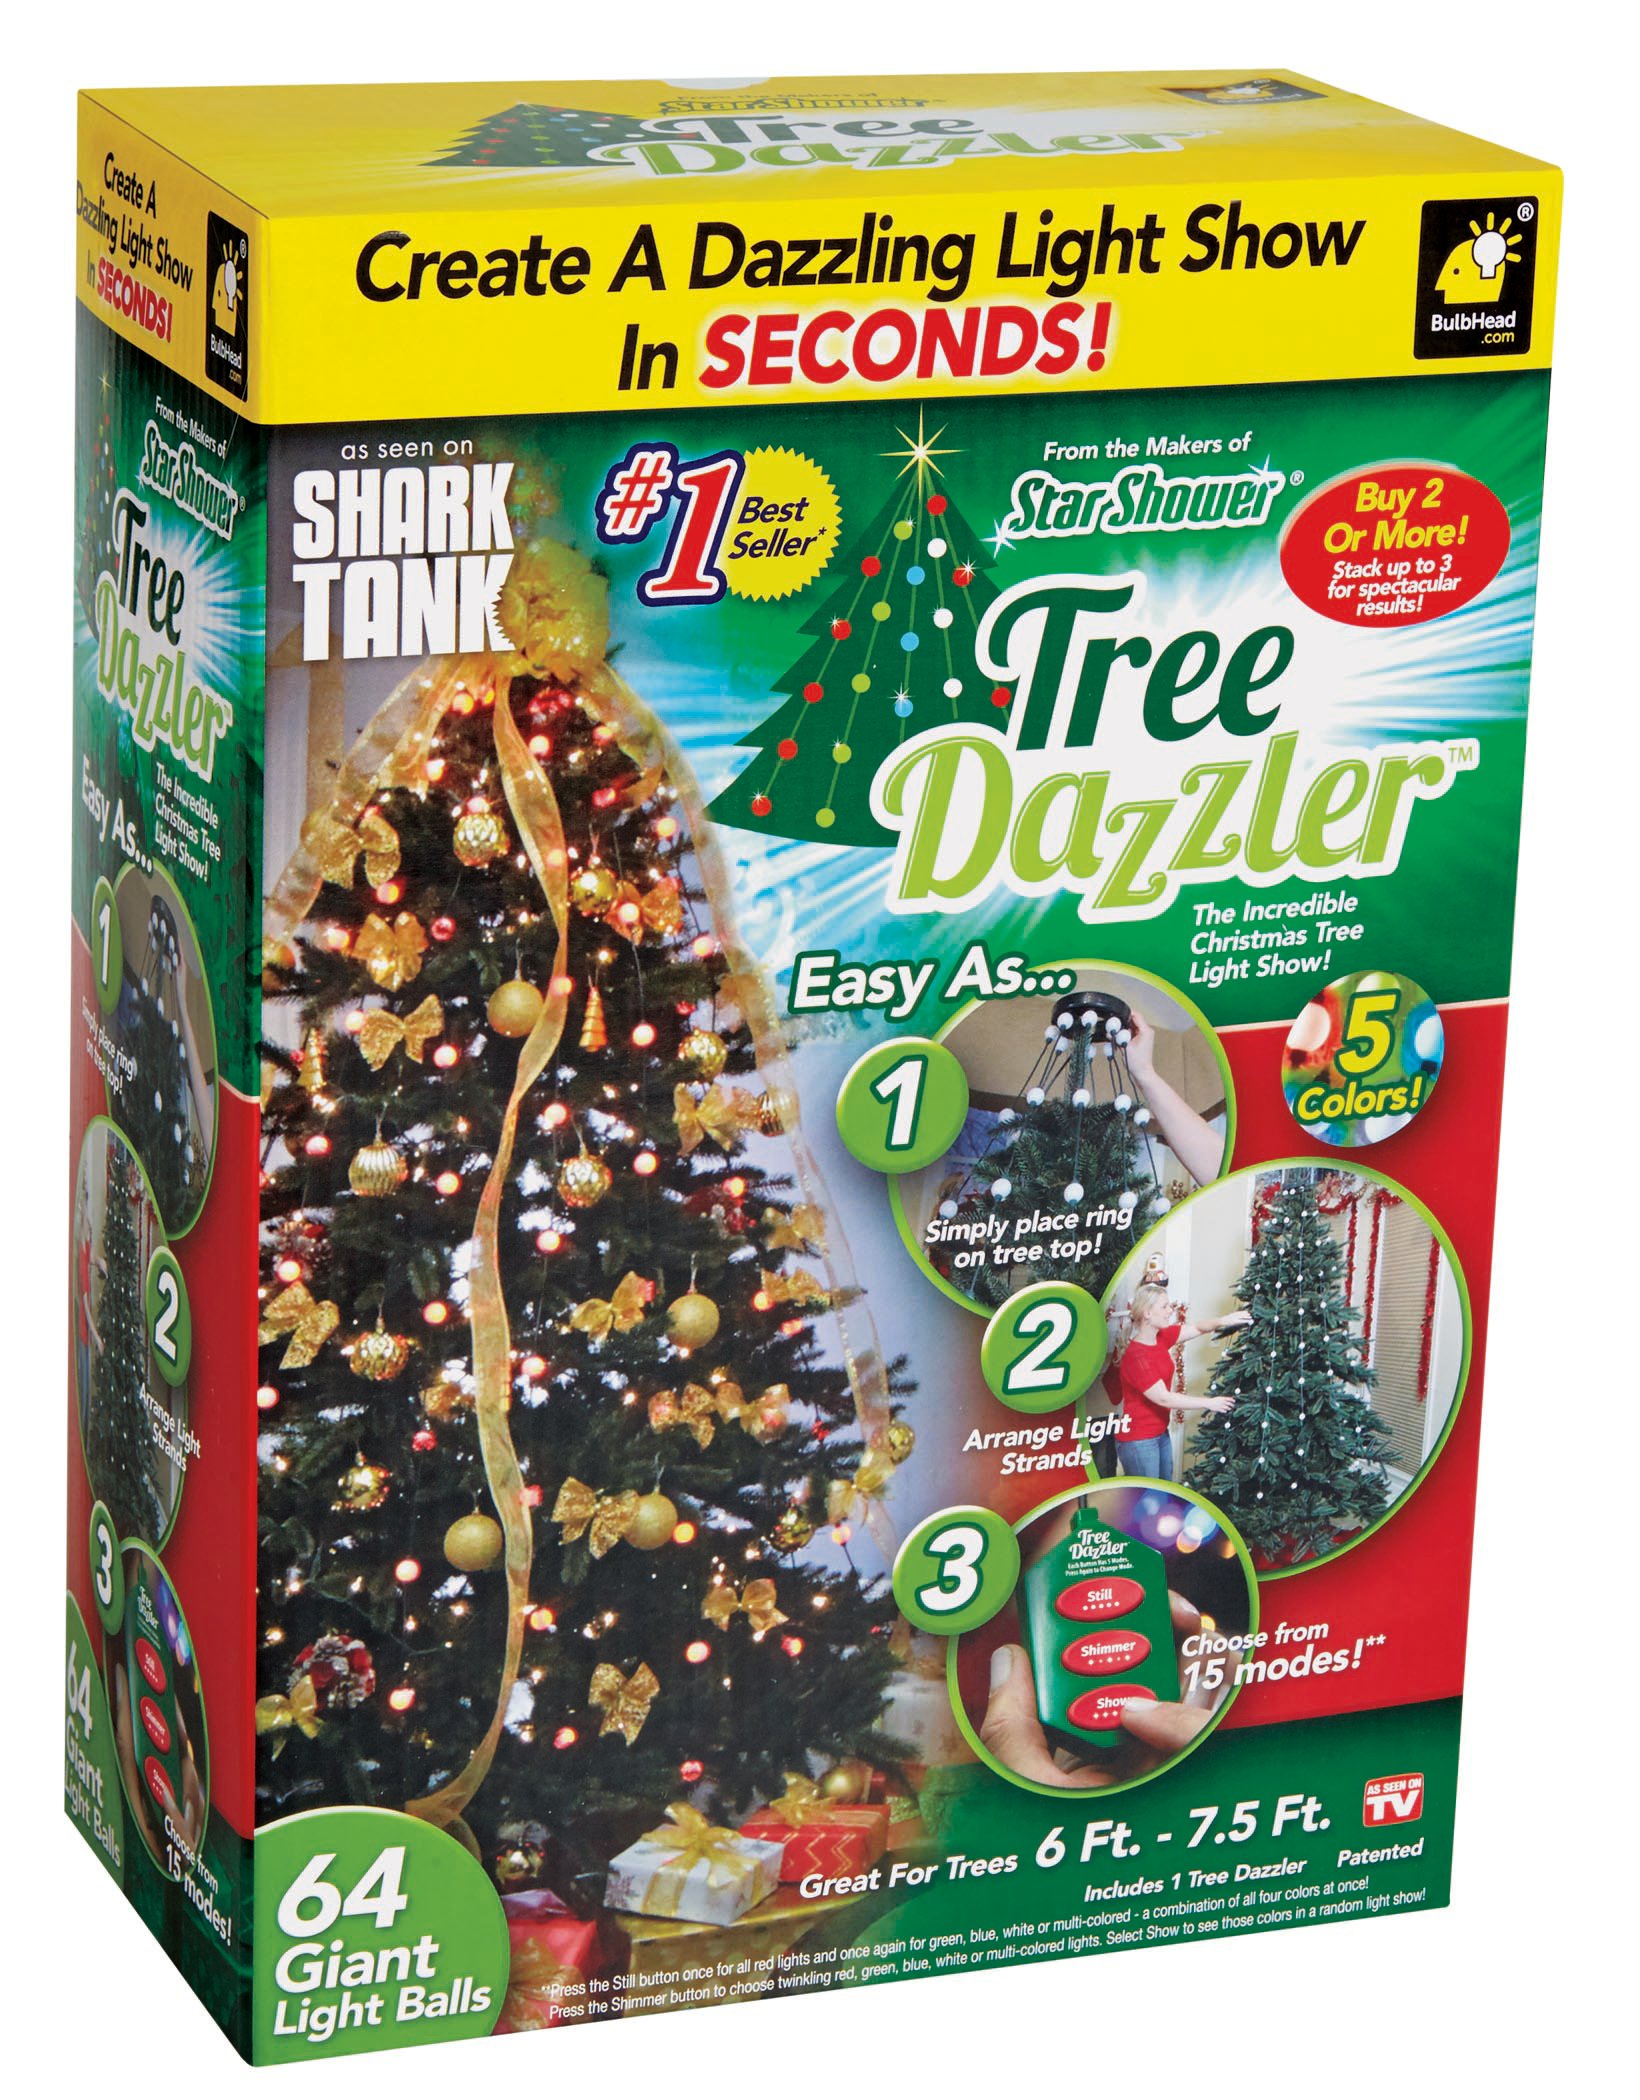 As Seen On TV Tree Dazzler - Shop Seasonal Decor